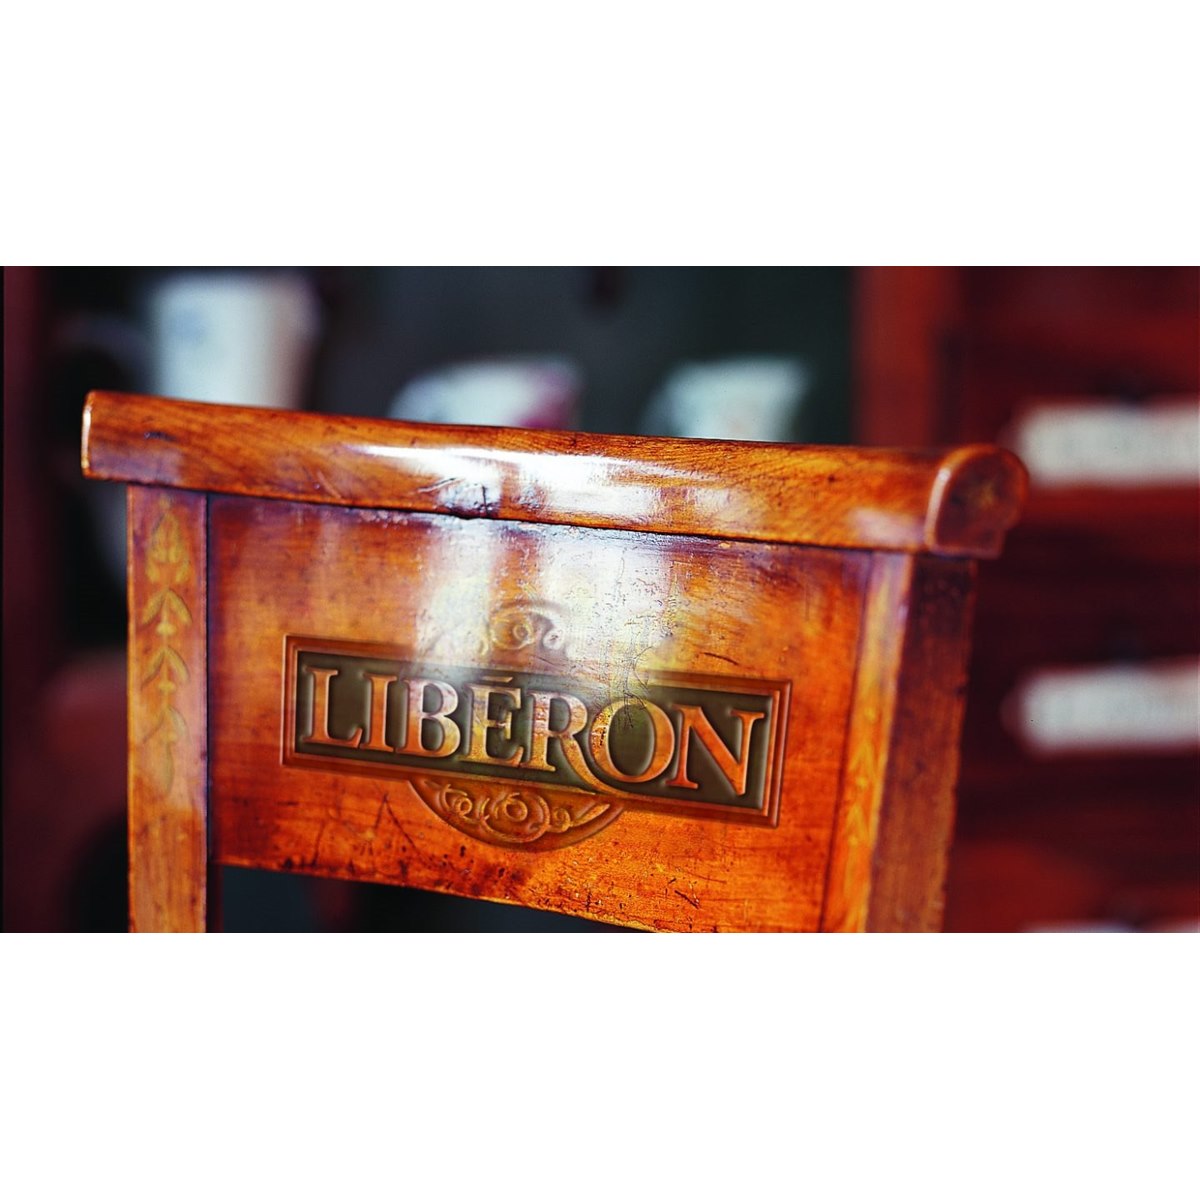 Where to buy Liberon Wood Floor Sealer